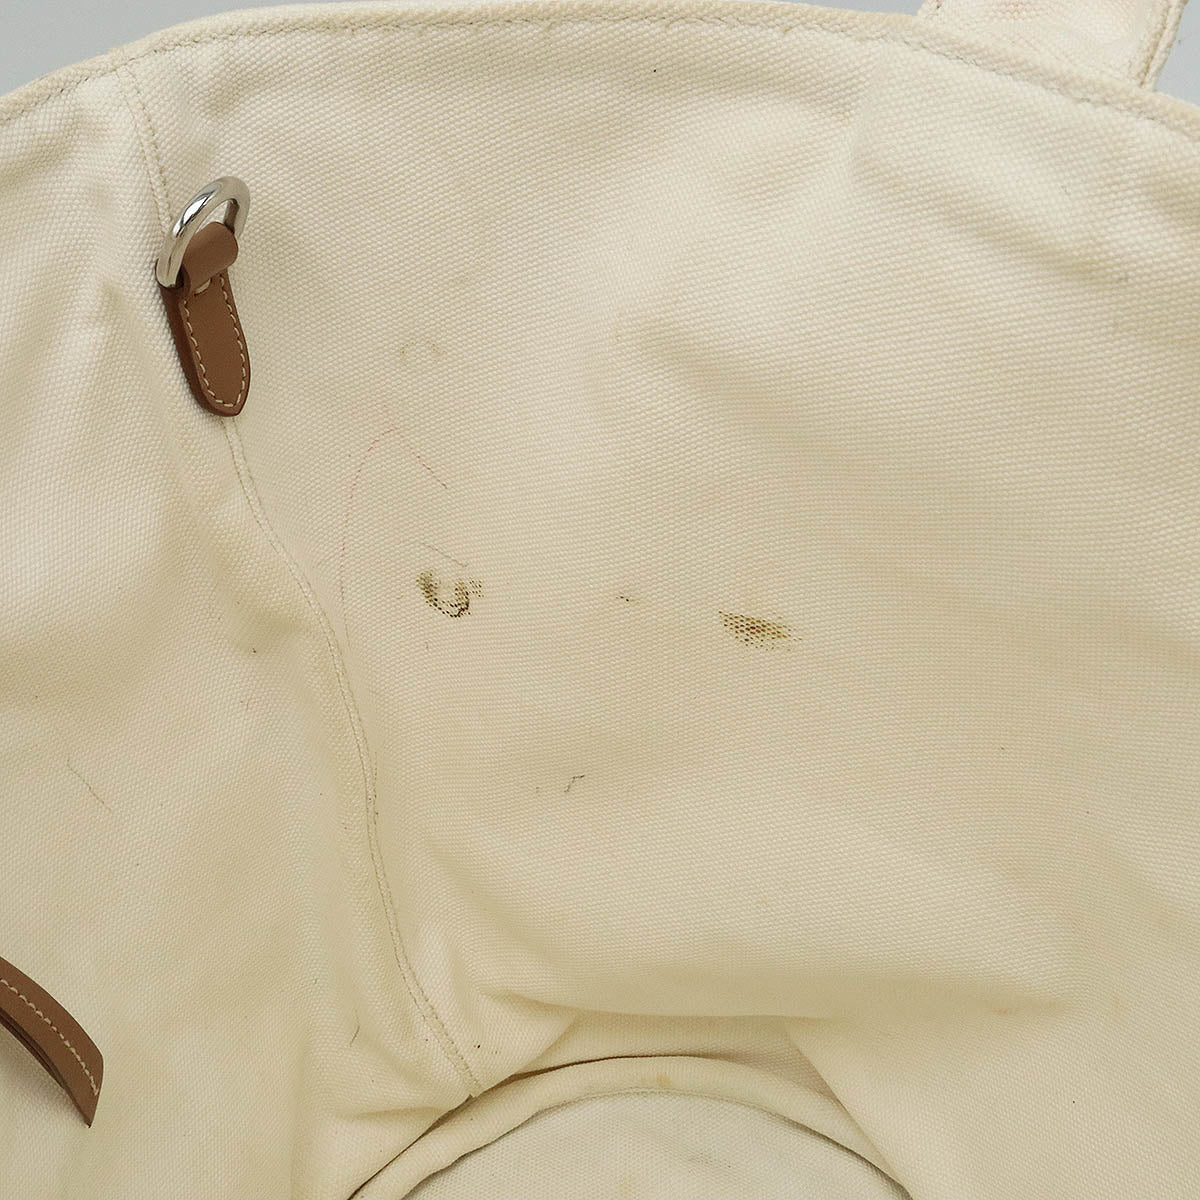 PRADA Canapa Tote Handbag Canvas Leather White 1BG163